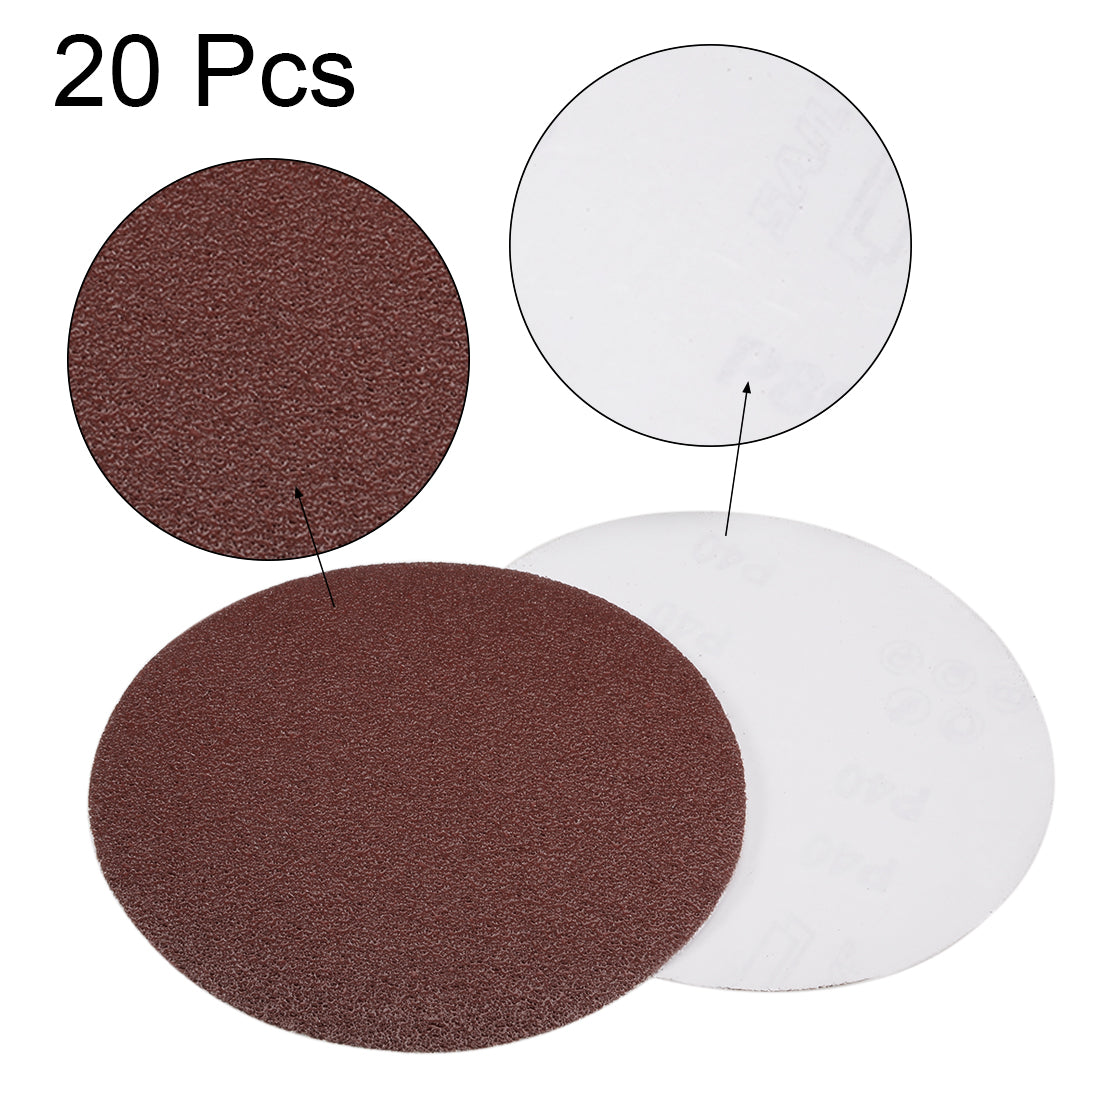 uxcell Uxcell 6-inch 40-Grits PSA Sanding Disc, Adhesive-Backed Sanding Sheets Aluminum Oxide Sandpaper for Random Orbital Sander 20pcs